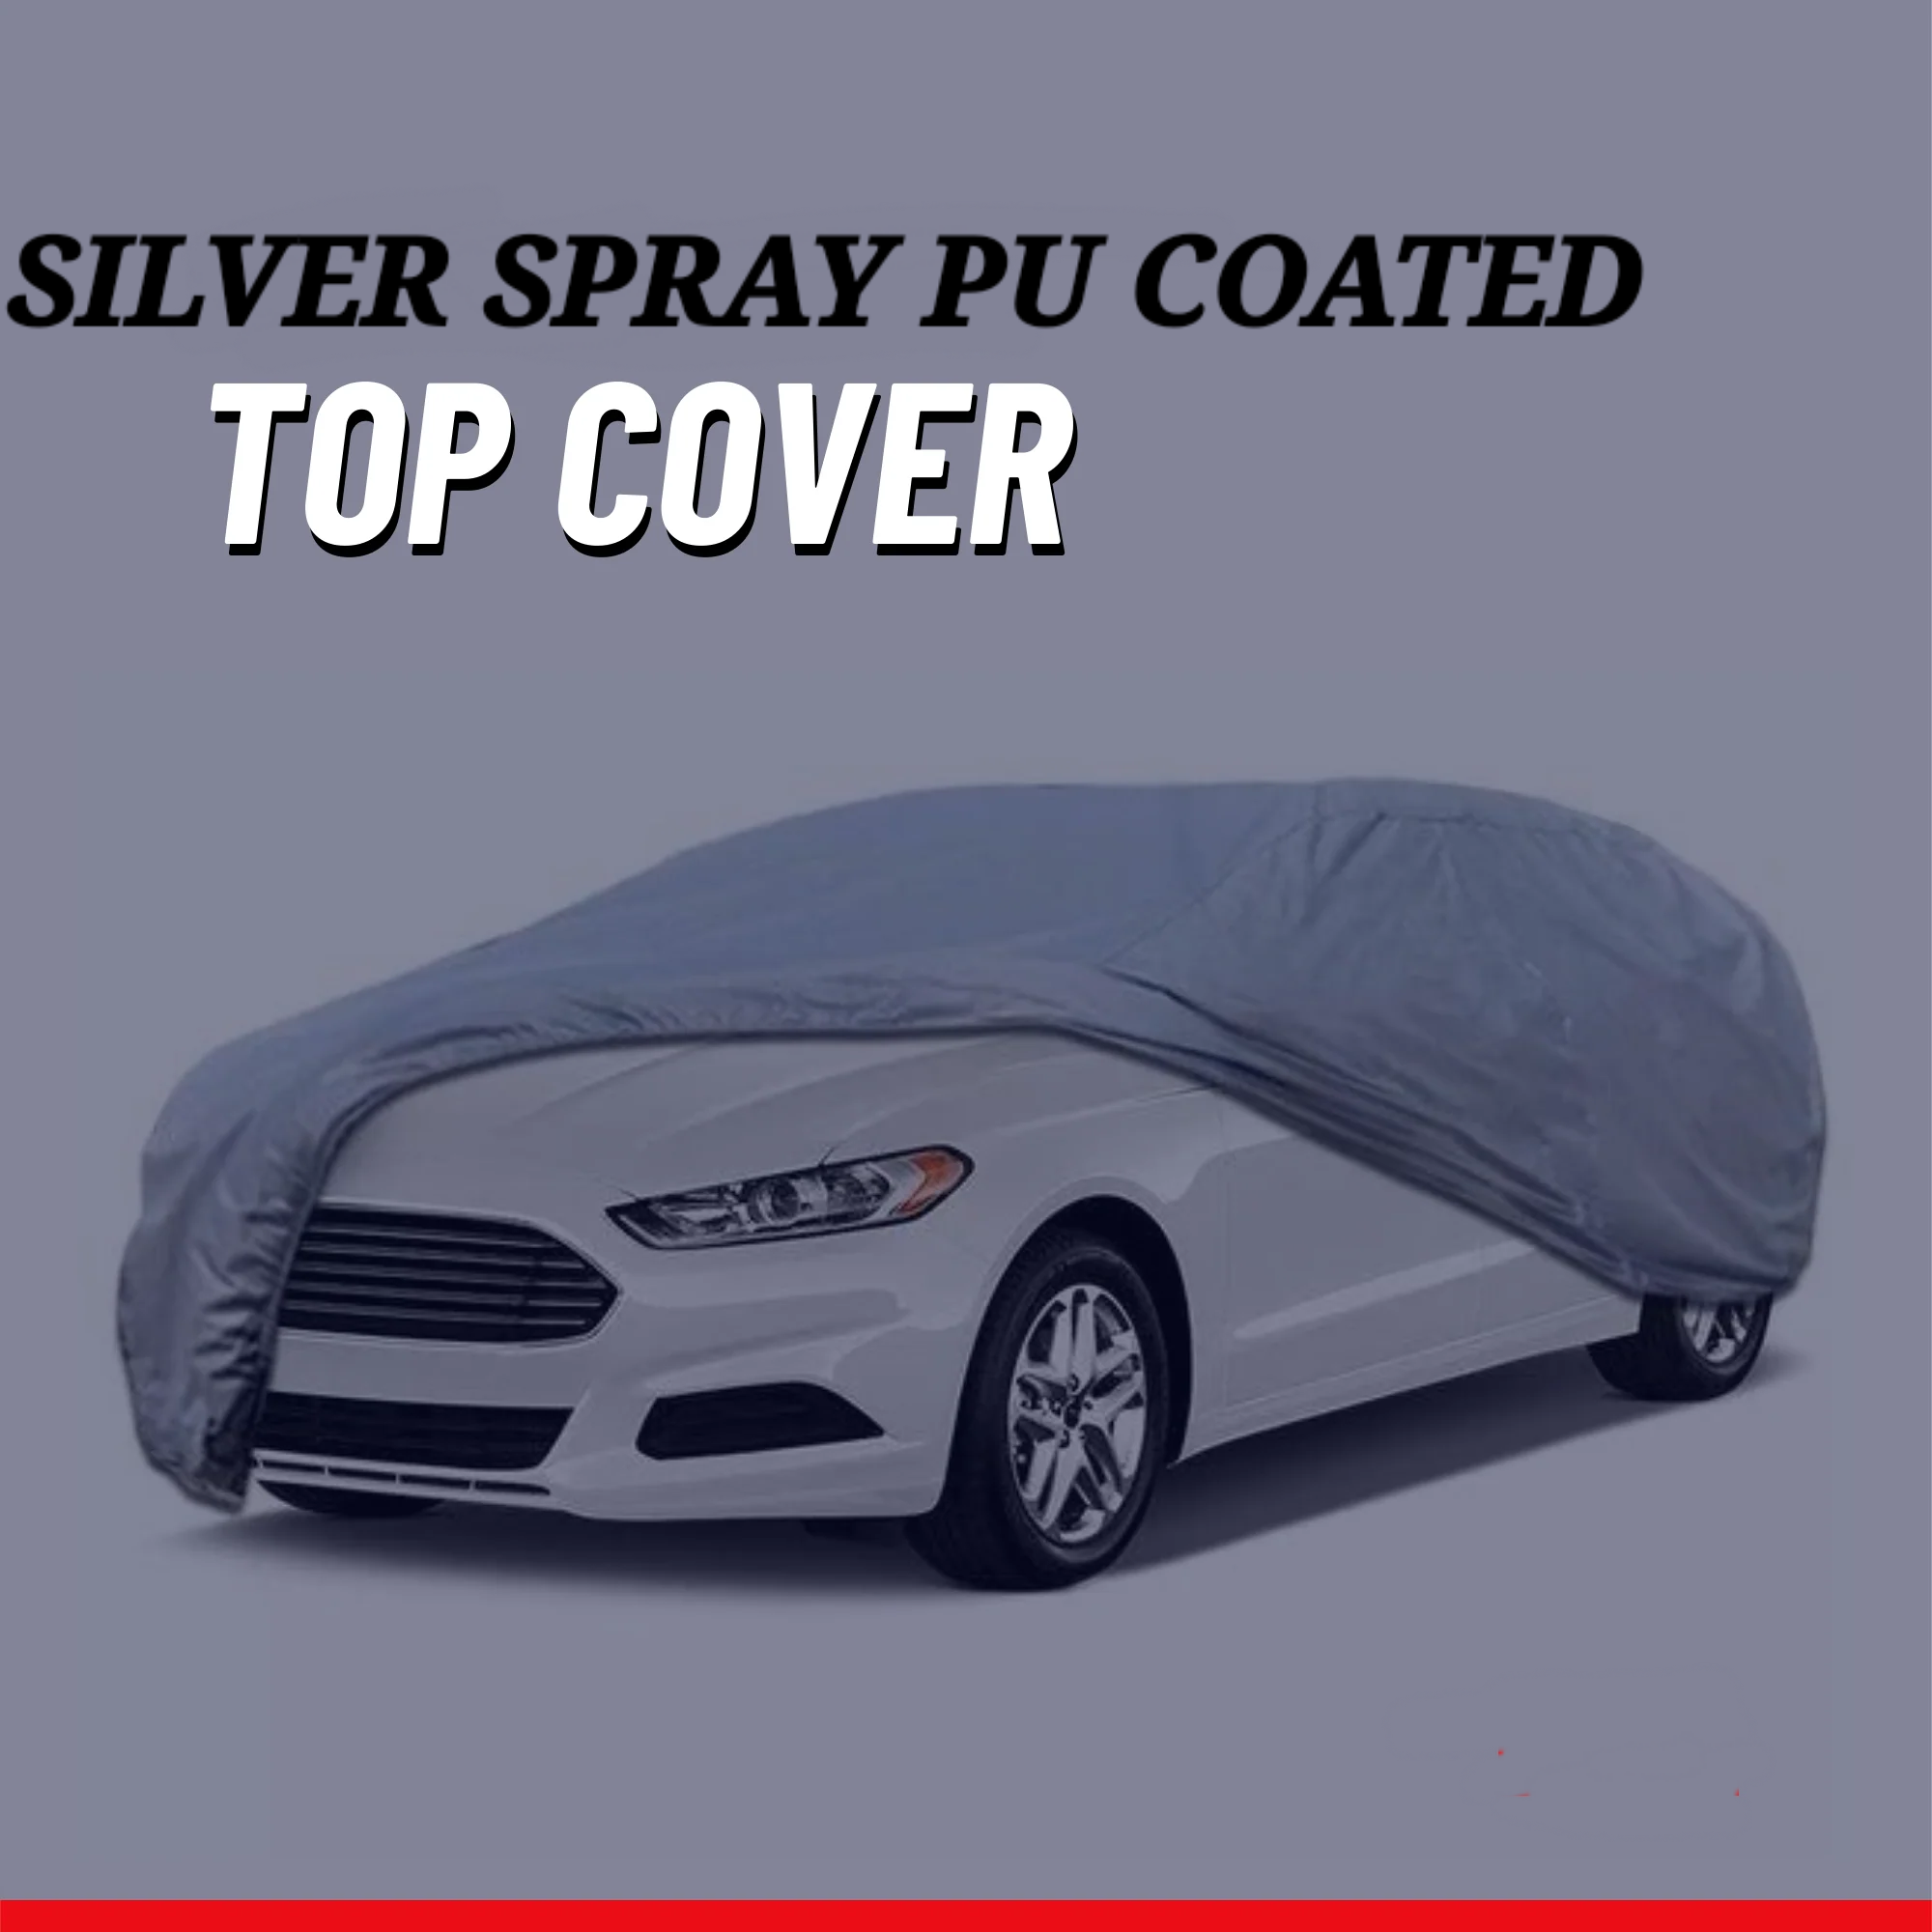 Kia Picanto 2019-2003 Car Top Cover - Waterproof & Dustproof Silver Spray Coated + Free Bag